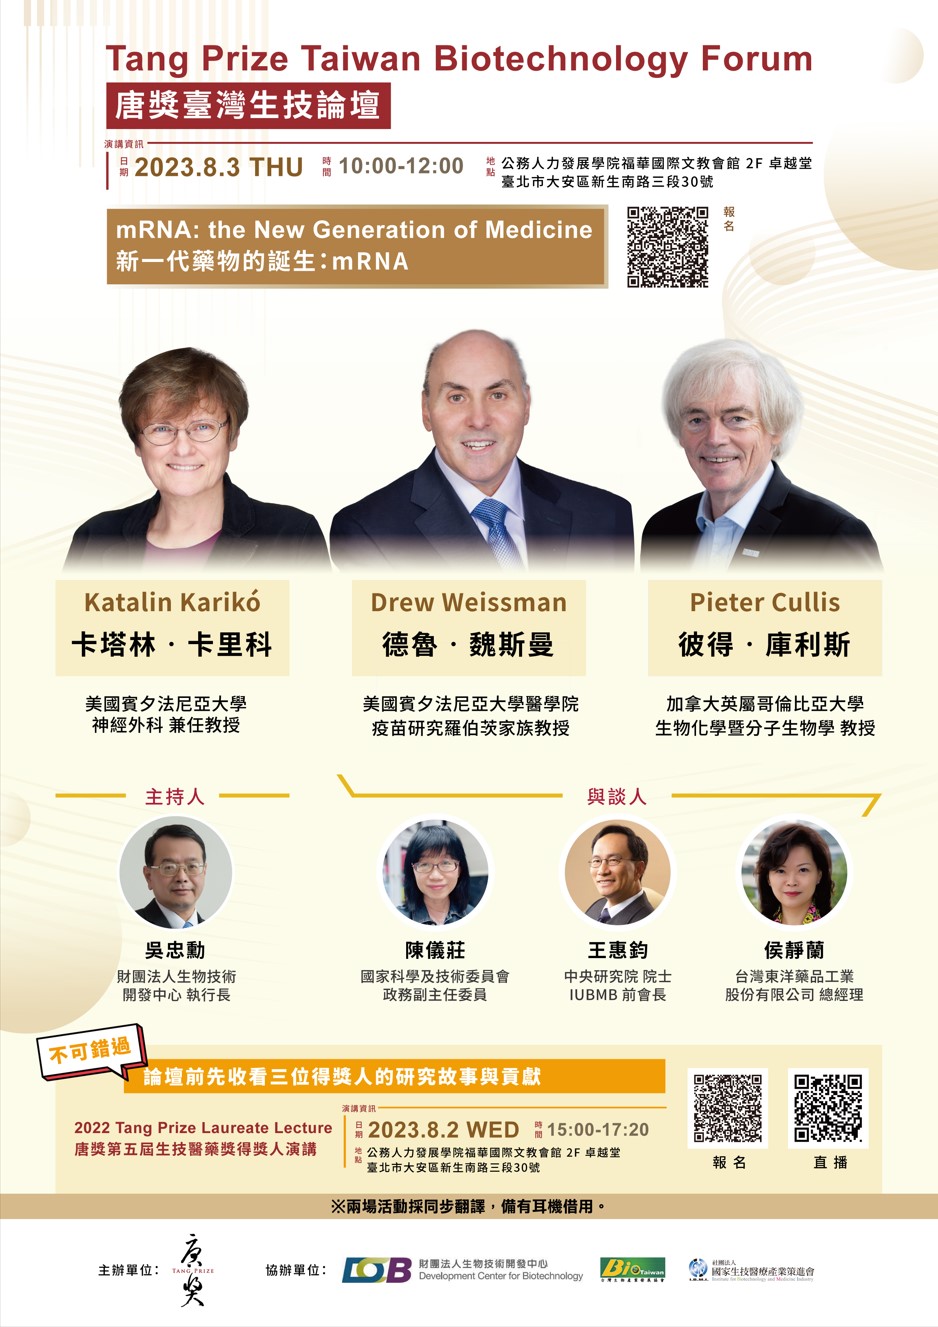 20231116-01-Tang Prize Taiwan Biotechnology